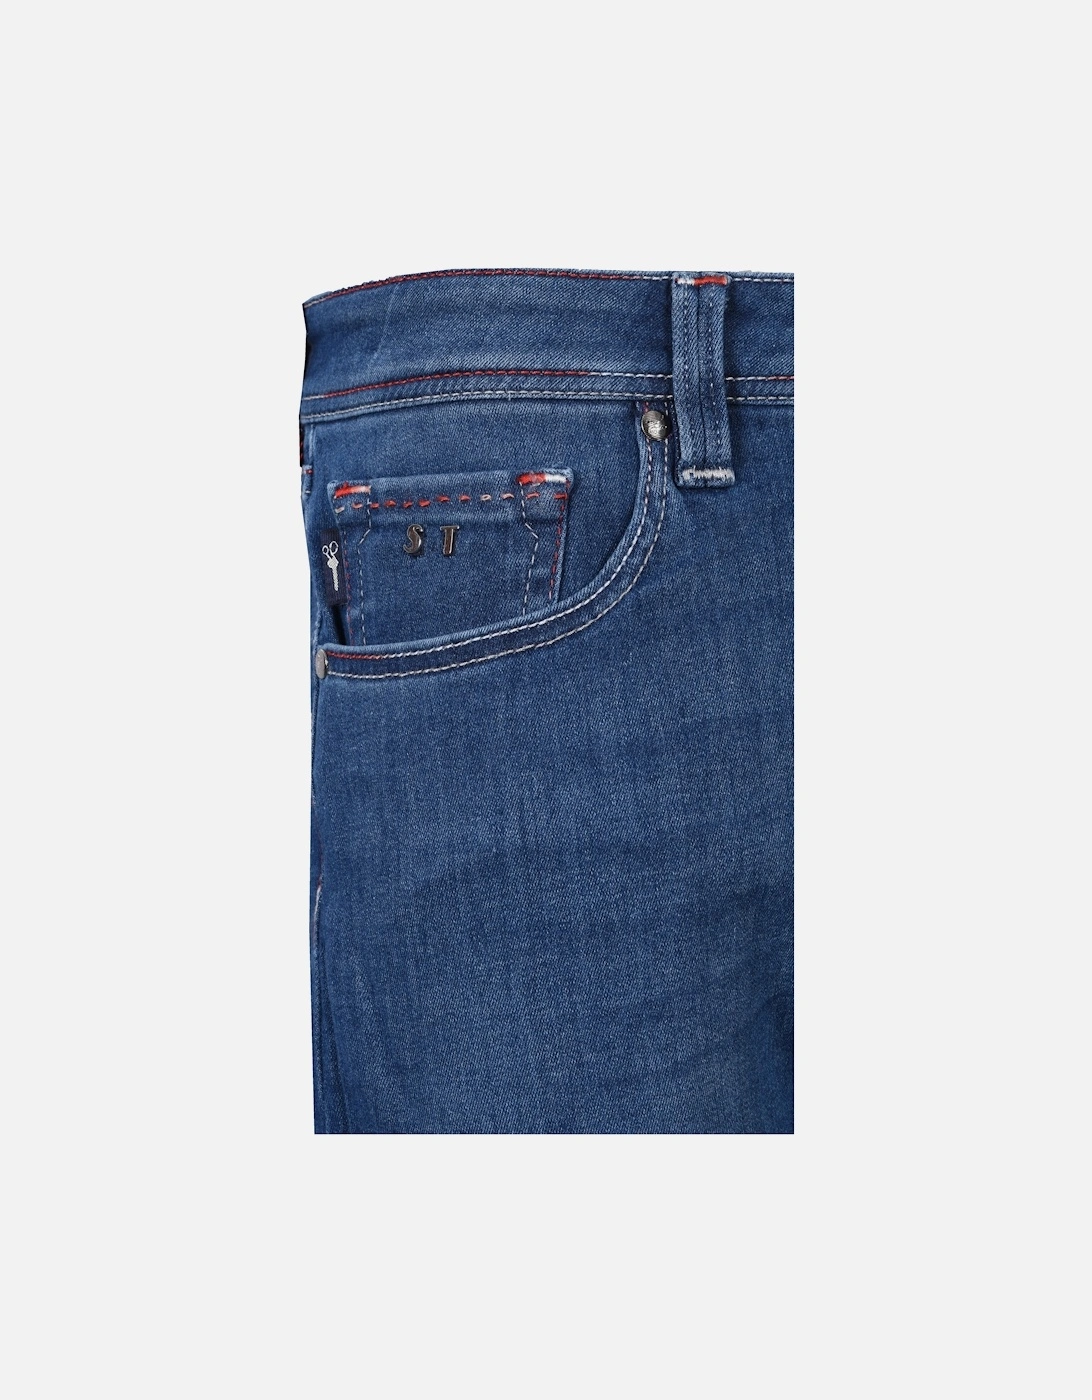 Slim Fit Jeans Light Denim 23E551